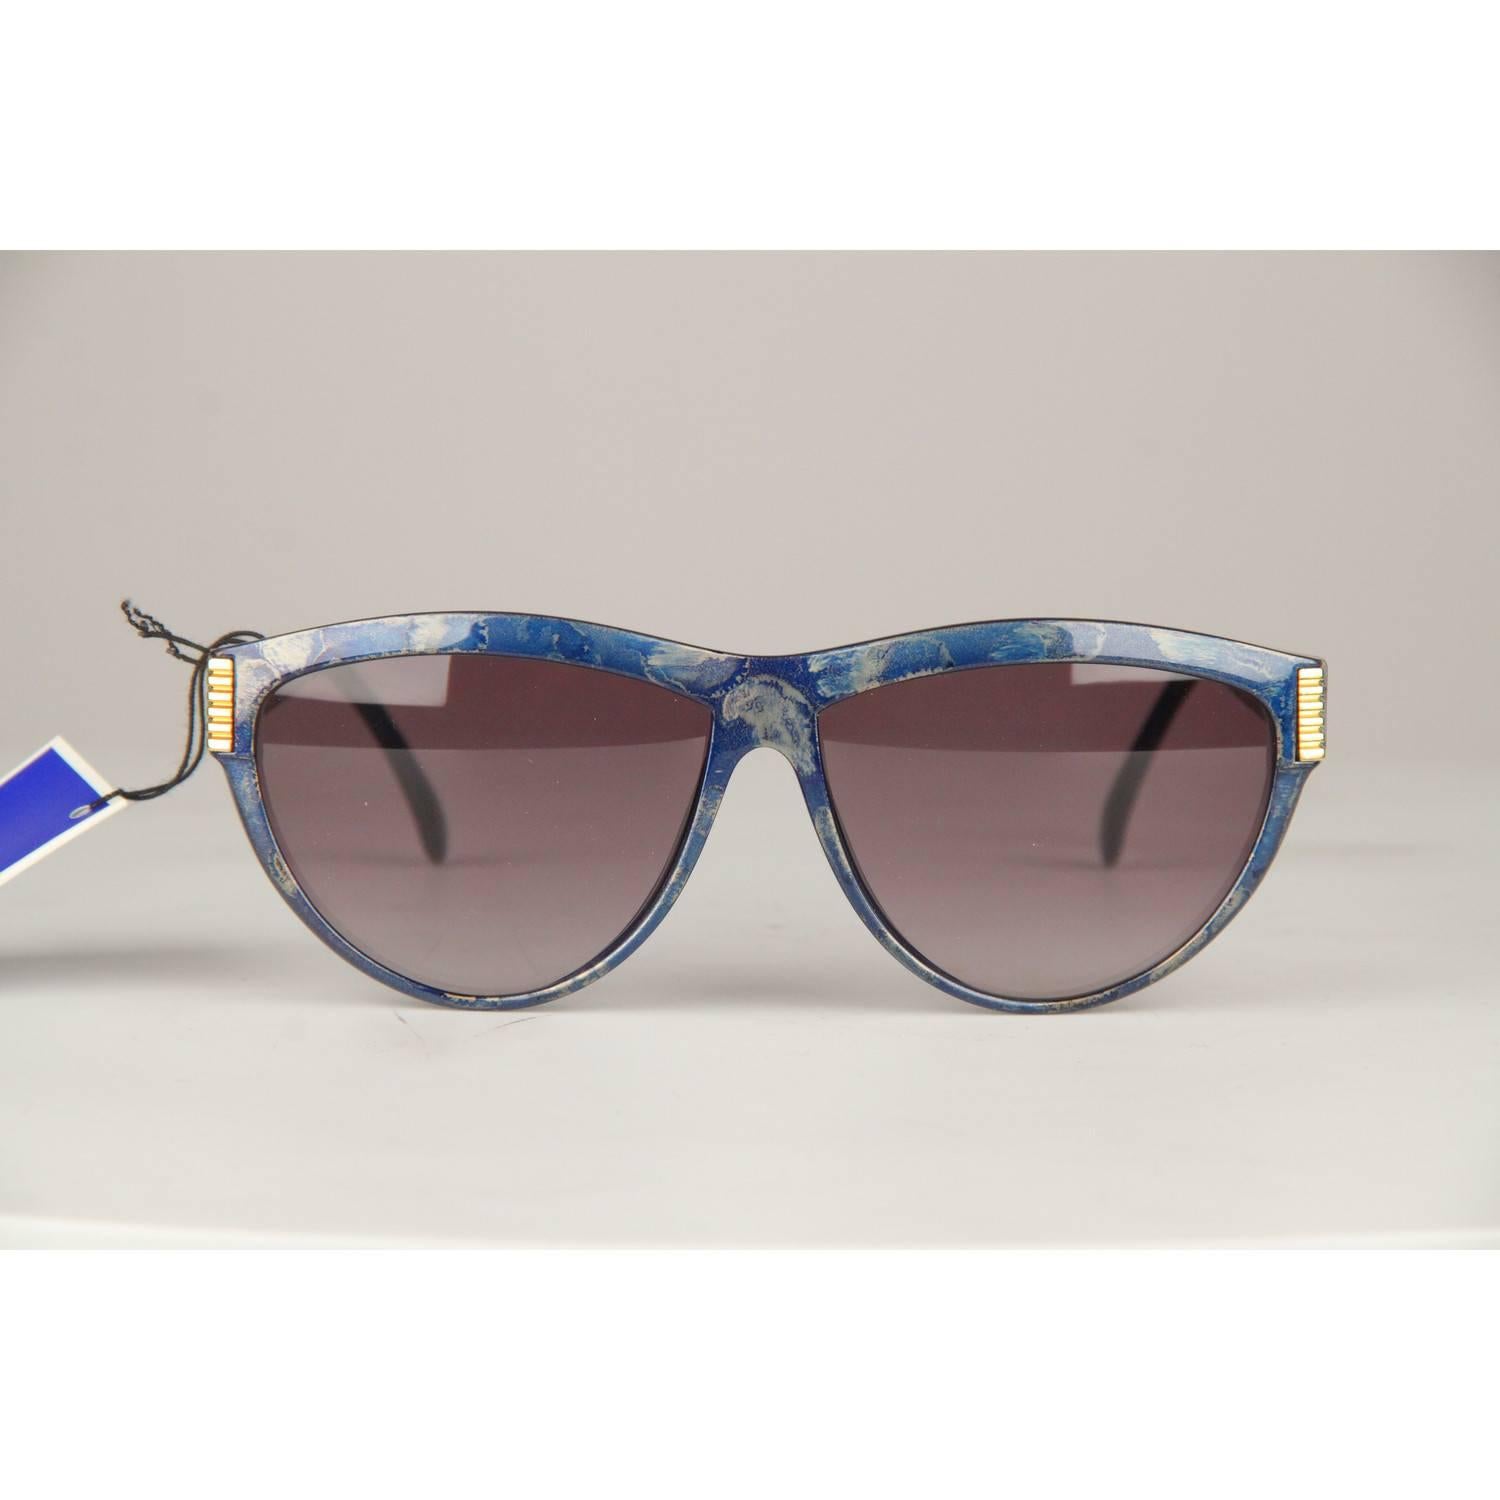 Yves Saint Laurent Vintage Blue Marbled Sunglasses 9045 56mm New Old Stock 3